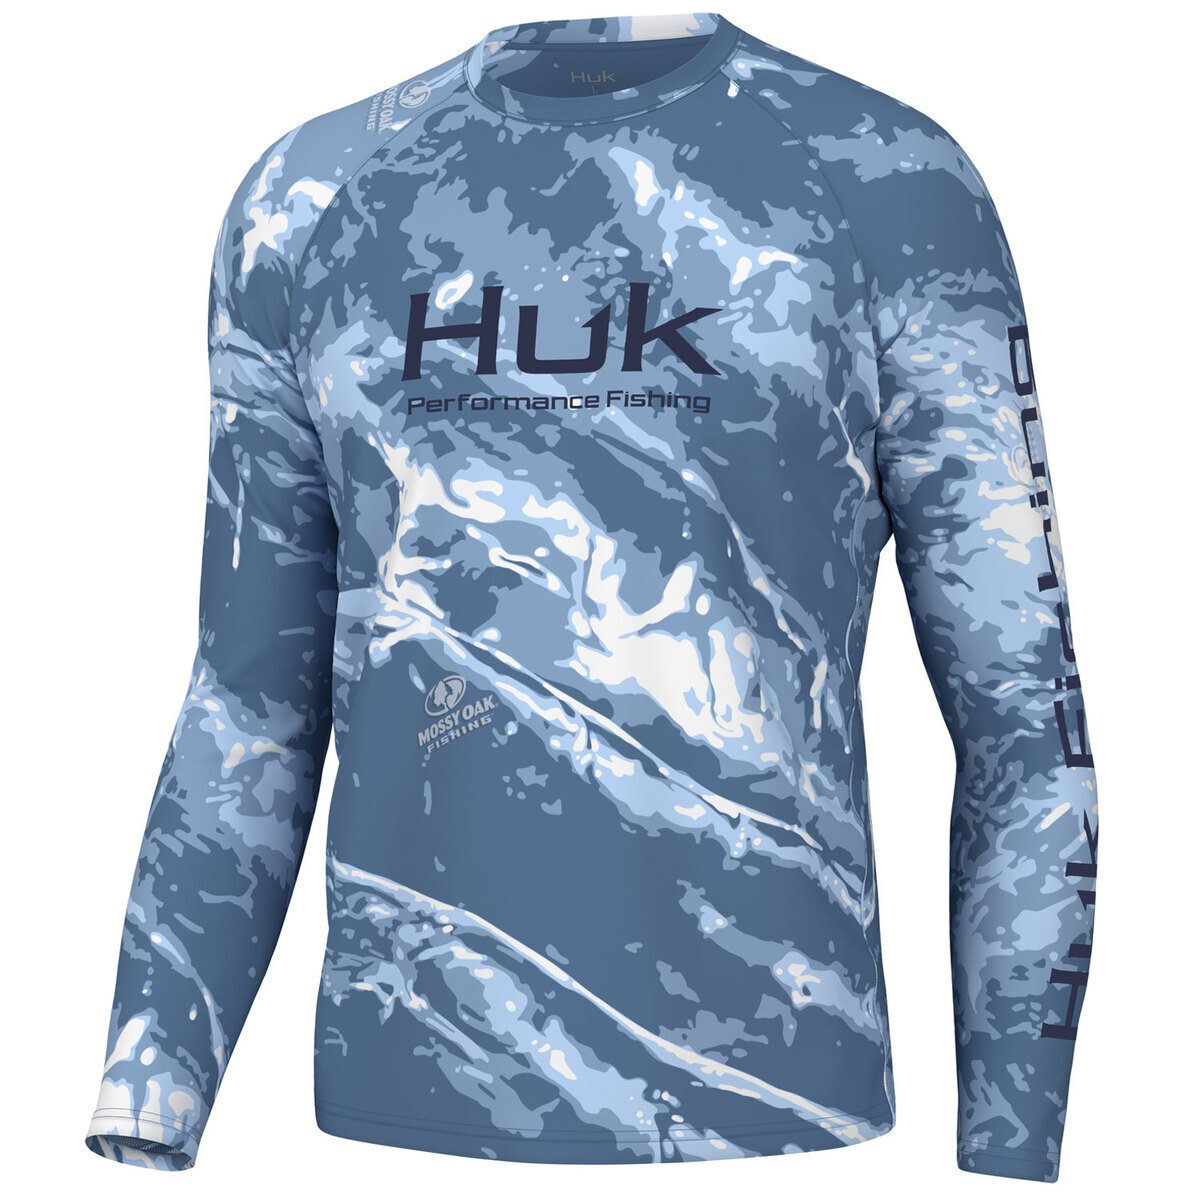 NEW Huk Gear Performance short sleeve - White Marlin Open